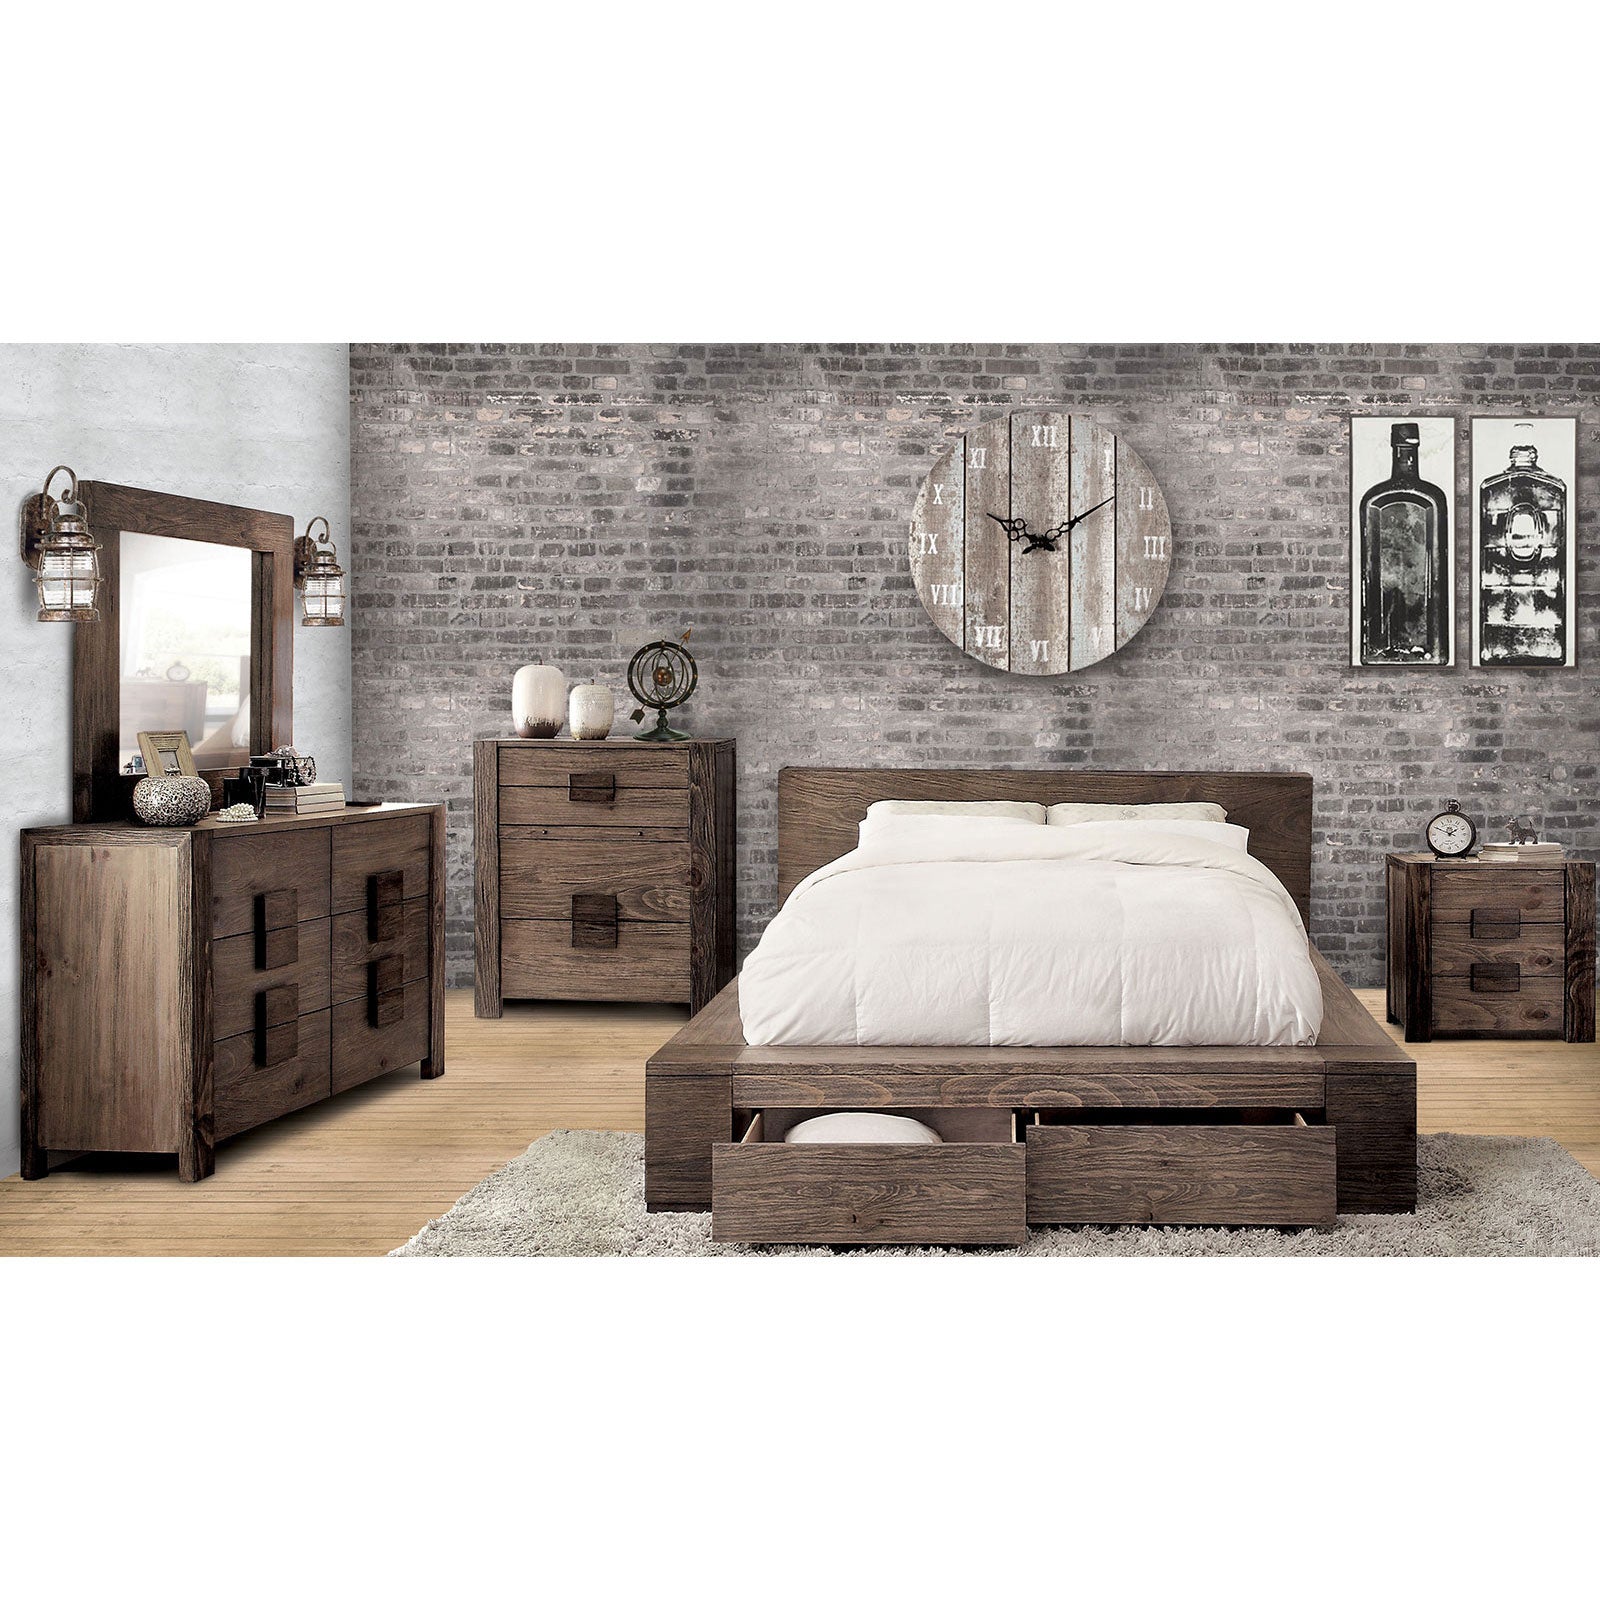 JANEIRO Rustic Natural Tone Cal.King Bed - Half Price Furniture